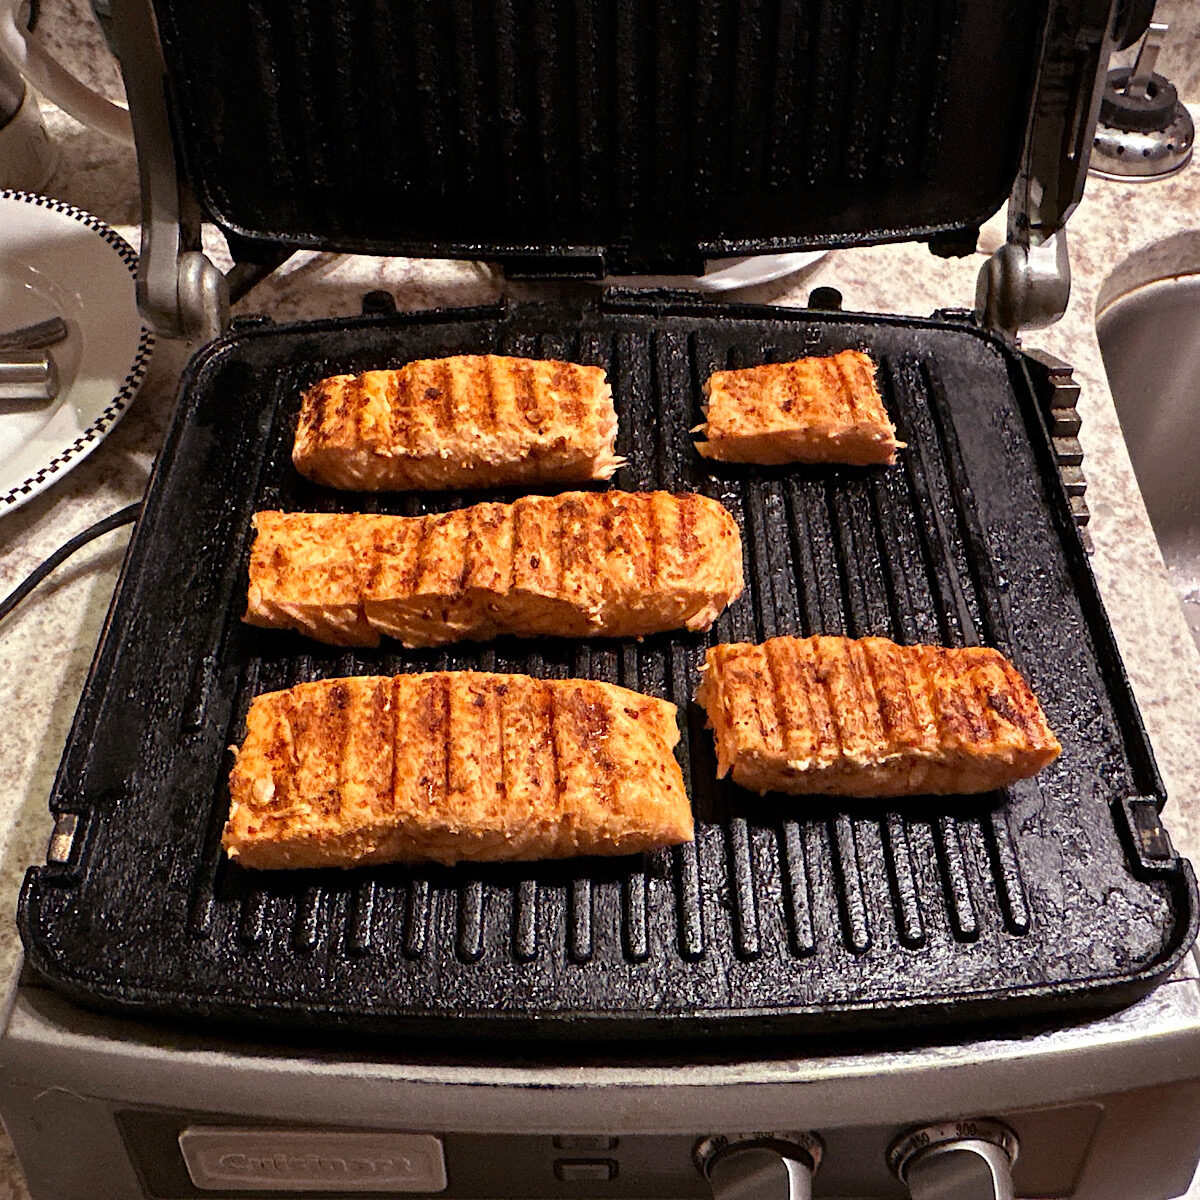 5 salmon filets after finished grilling on the Cuisinart griddler.